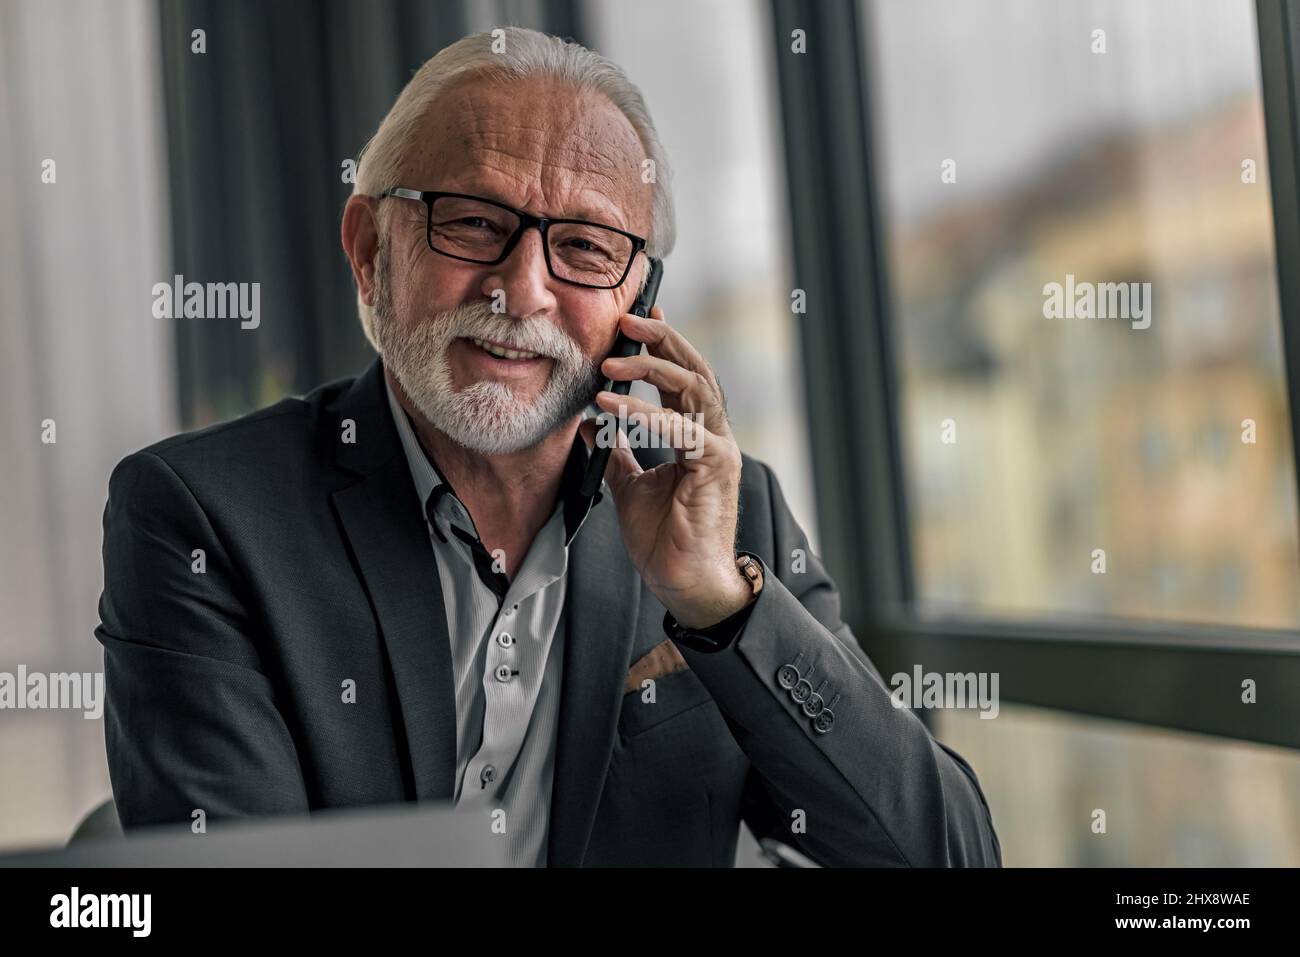 Handsome senior man businessman entrepreneur making a phone call looking at camera Stock Photo